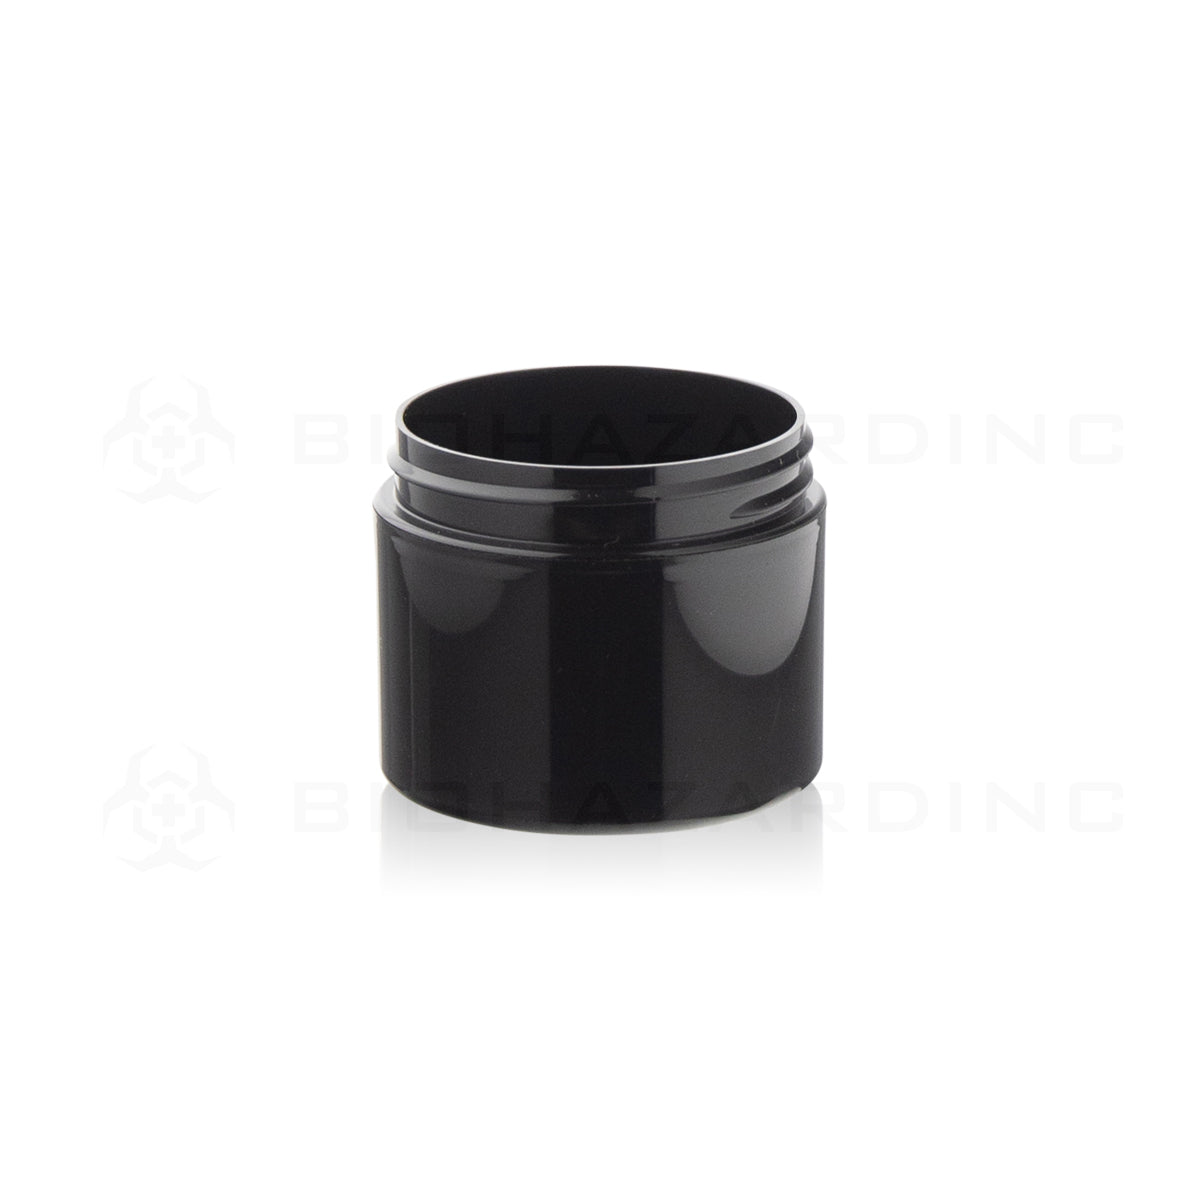 Plastic Jar | Straight Sided Plastic Jars - Black | 58mm - 2oz - 660 Count Plastic Jar Biohazard Inc   